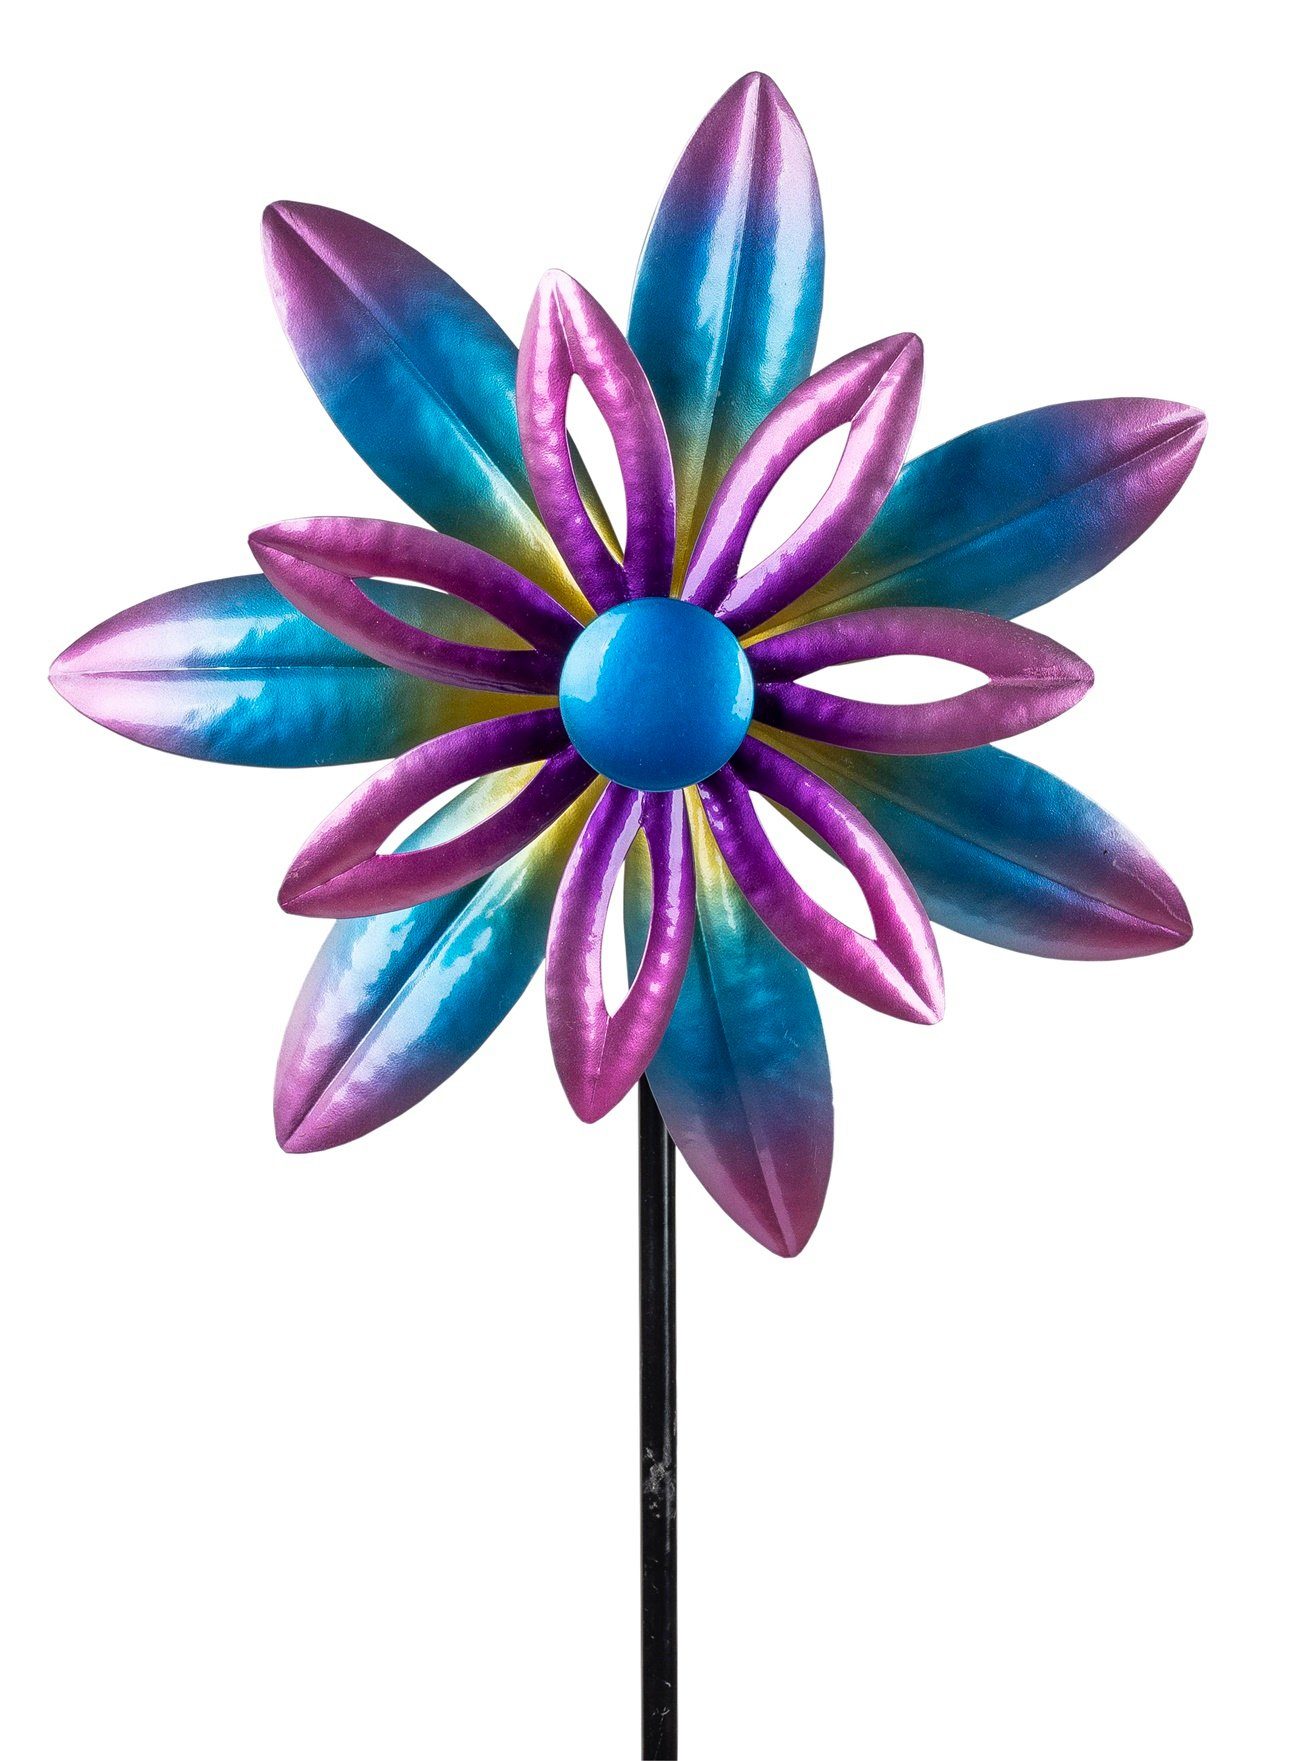 dekojohnson Deko-Windrad Windrad Blume Metall Gartendeko violett 30x126cm (kein Set, kein Set)